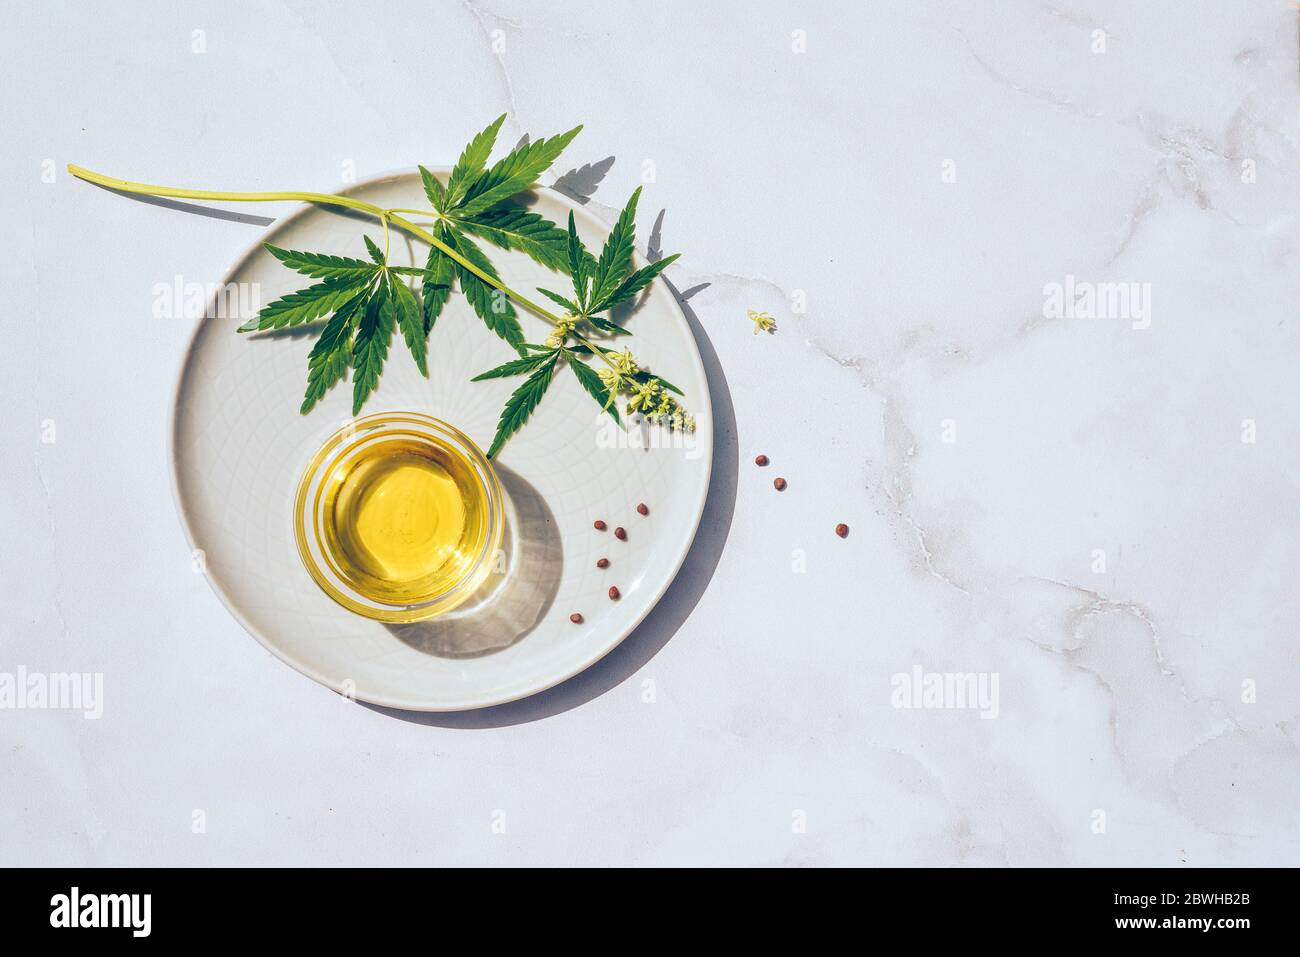 Medical marijuana cannabis cbd oil. CBD oil hemp products Alternative Homeopathy Stock Photo